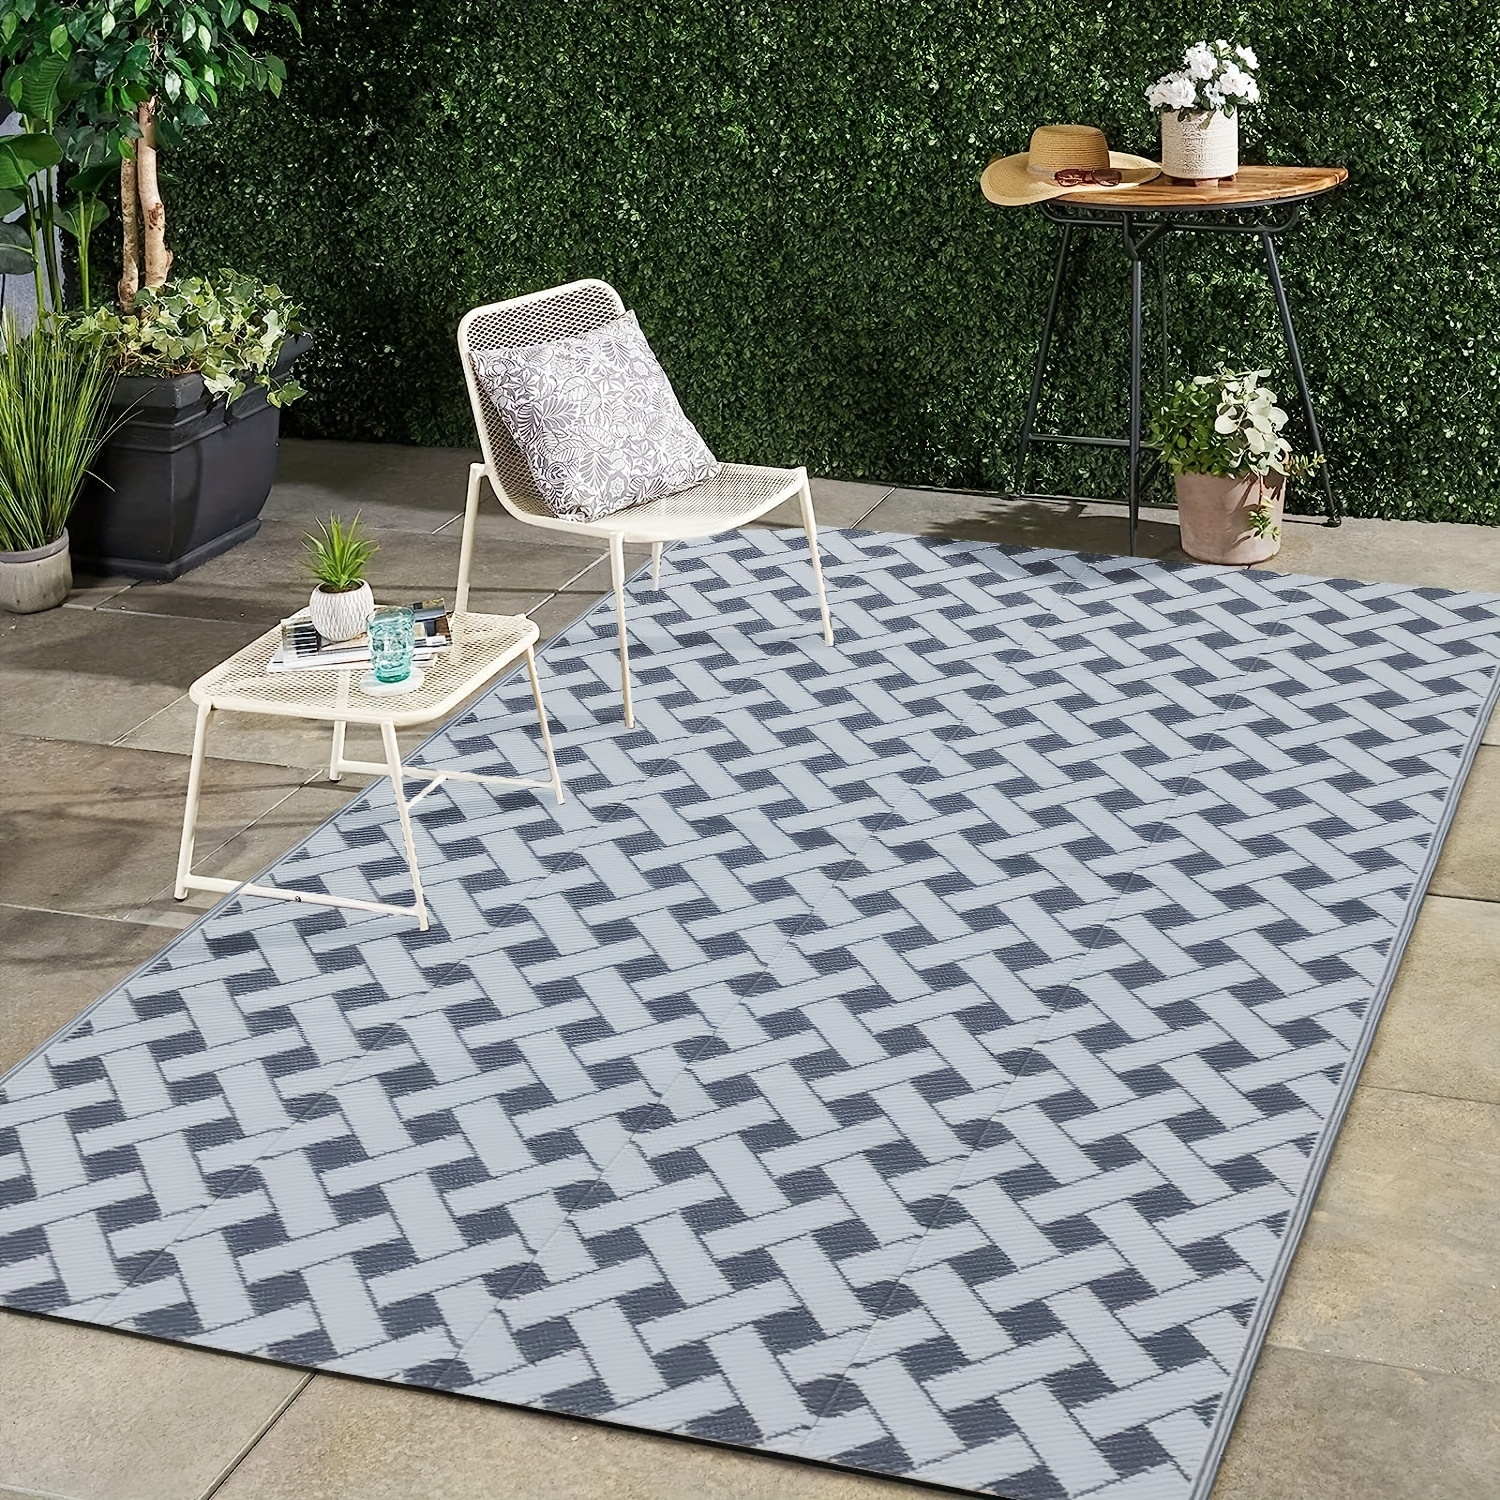 6'x9' Outdoor rugs Patio Plastic Straw waterproof Grey,Teal camper